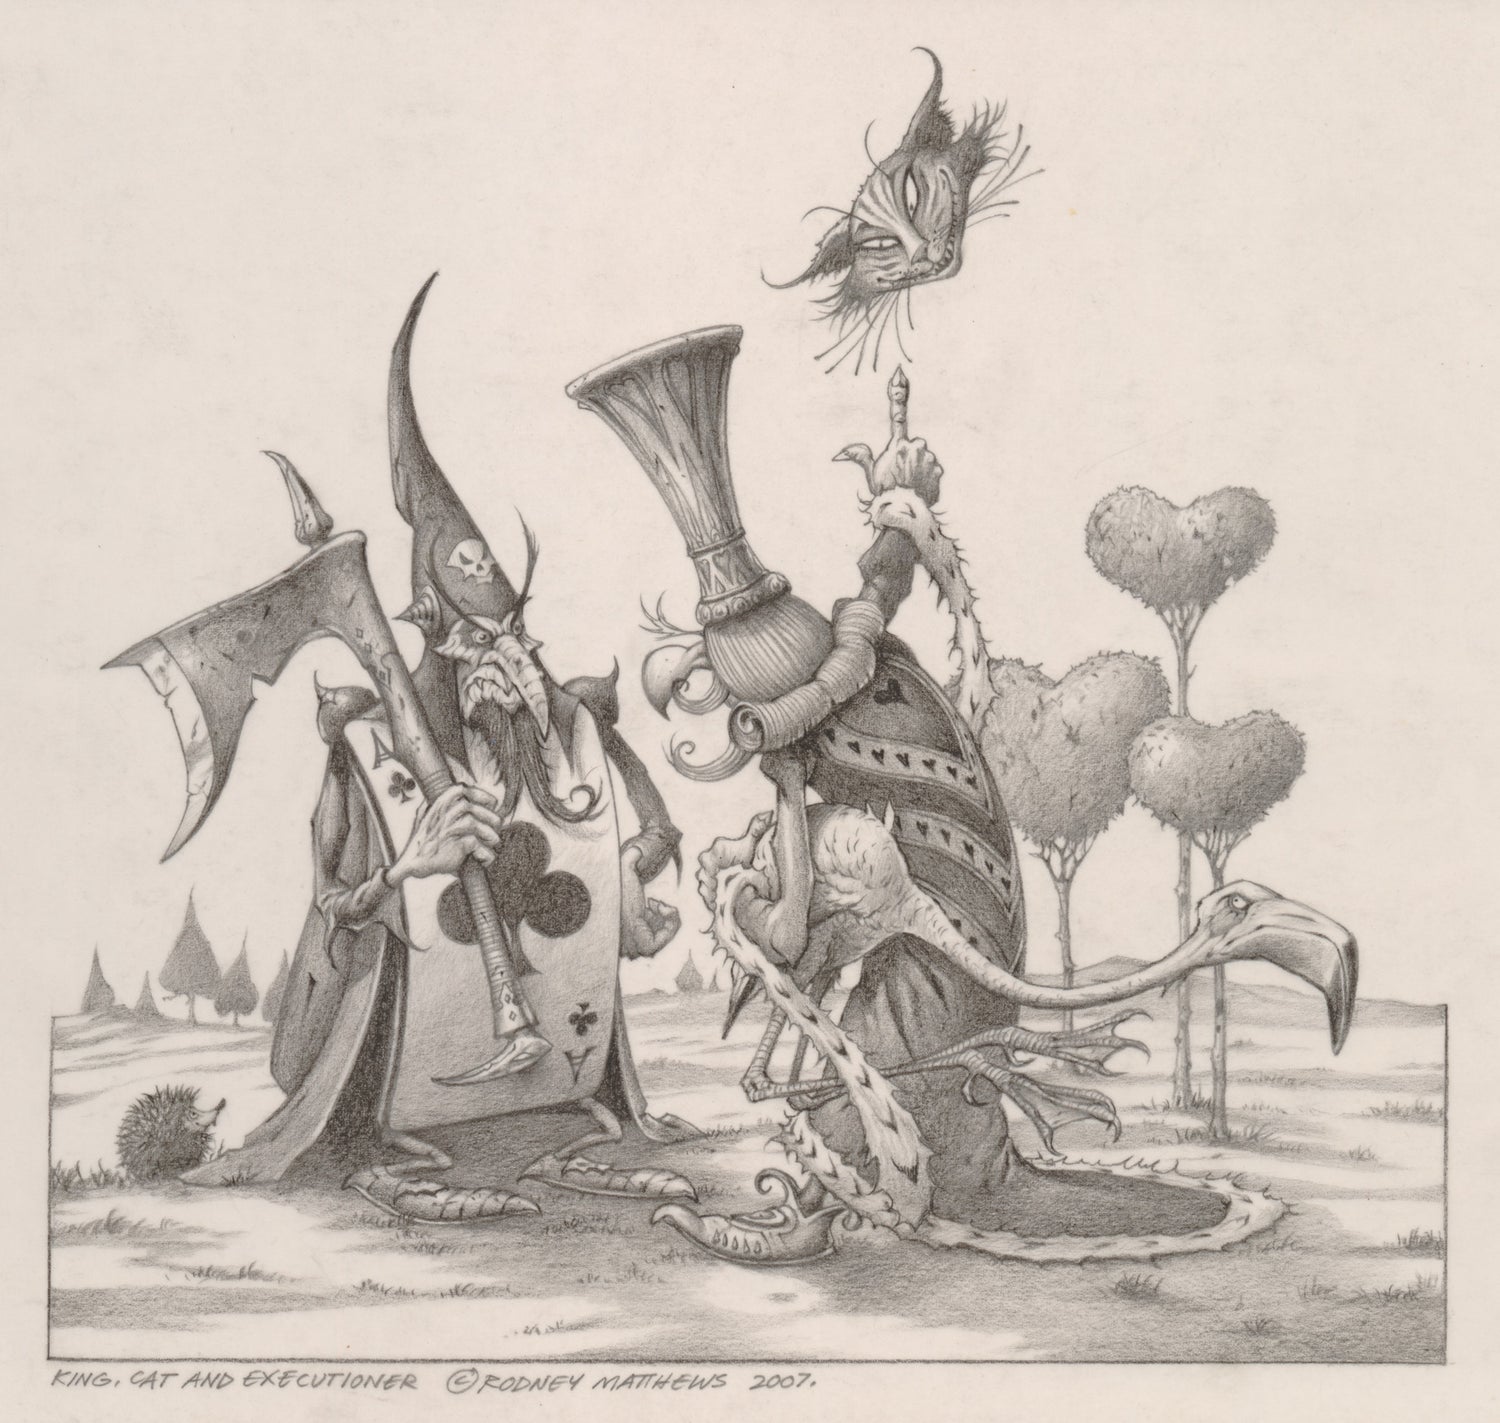 King, Cat and Executioner (Alice in Wonderland) original pencil sketch by Rodney Matthews